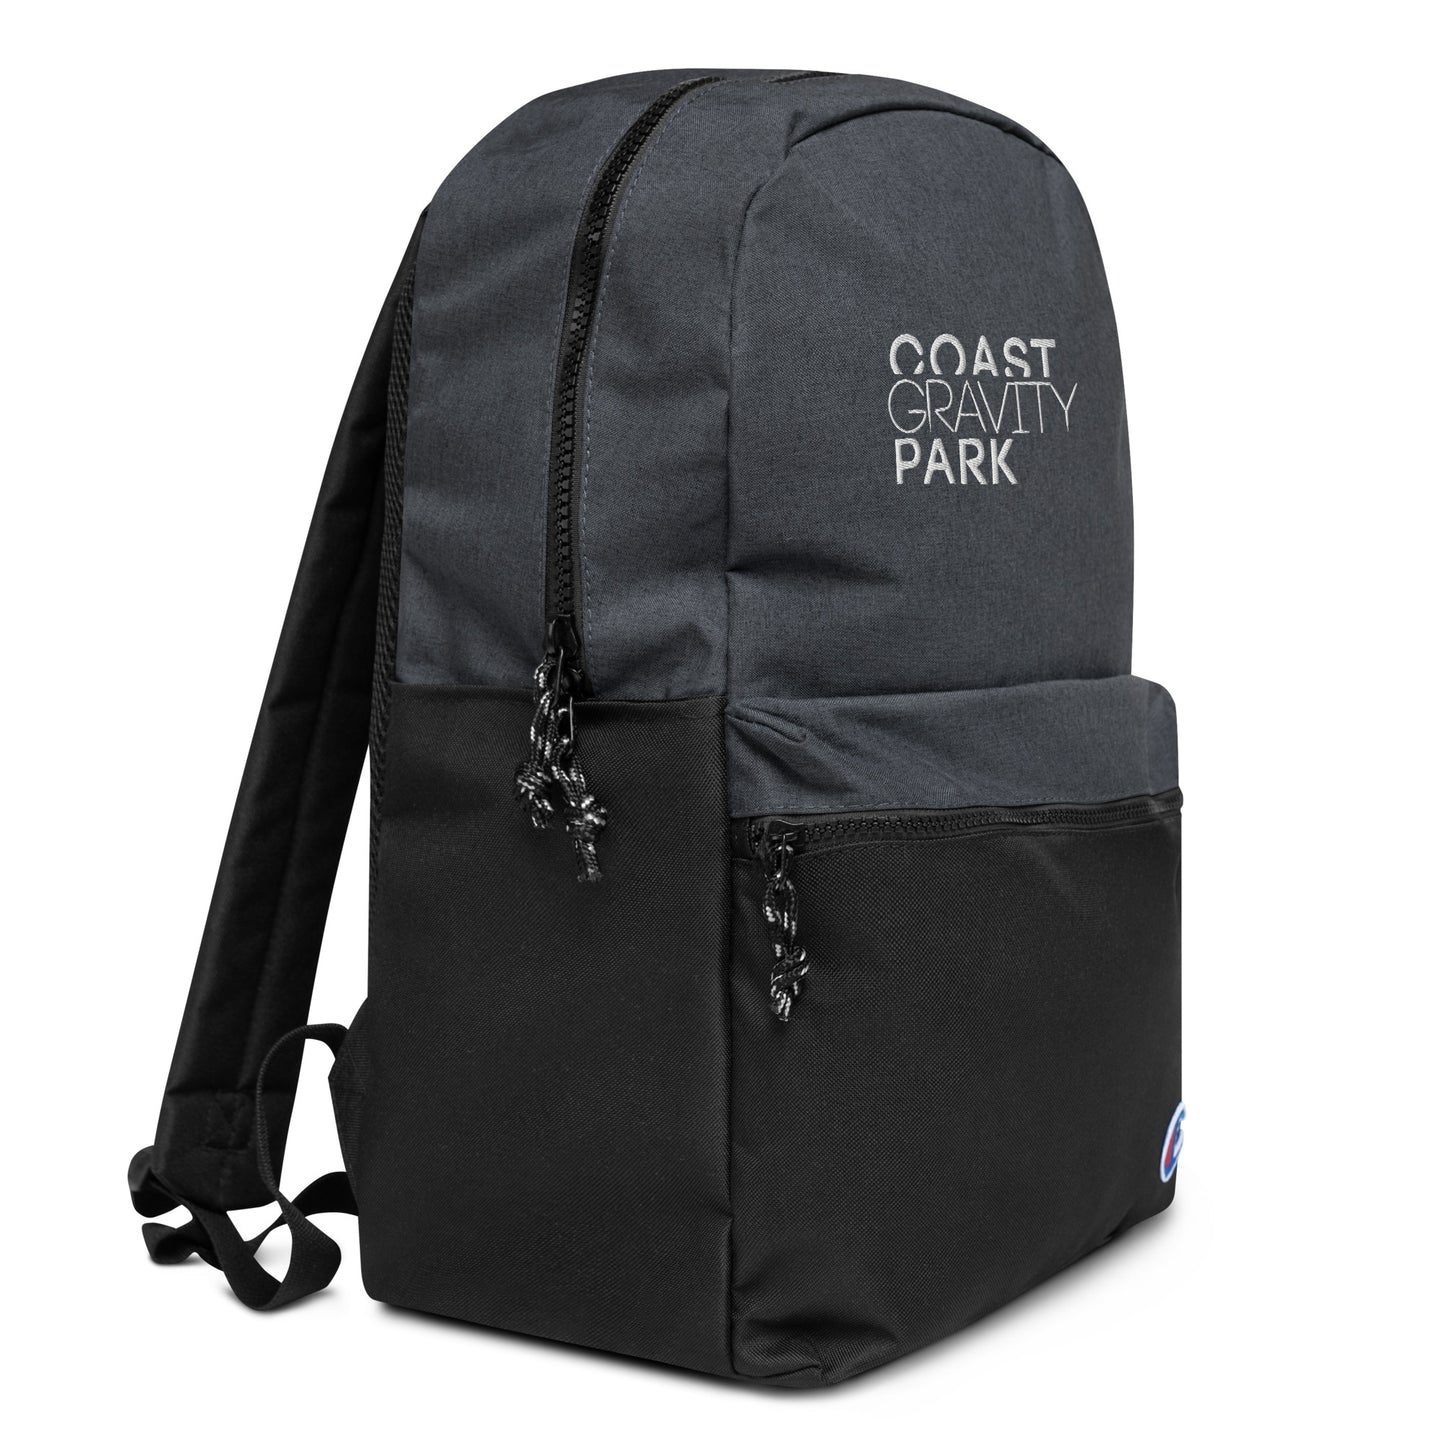 CGP Champion Backpack